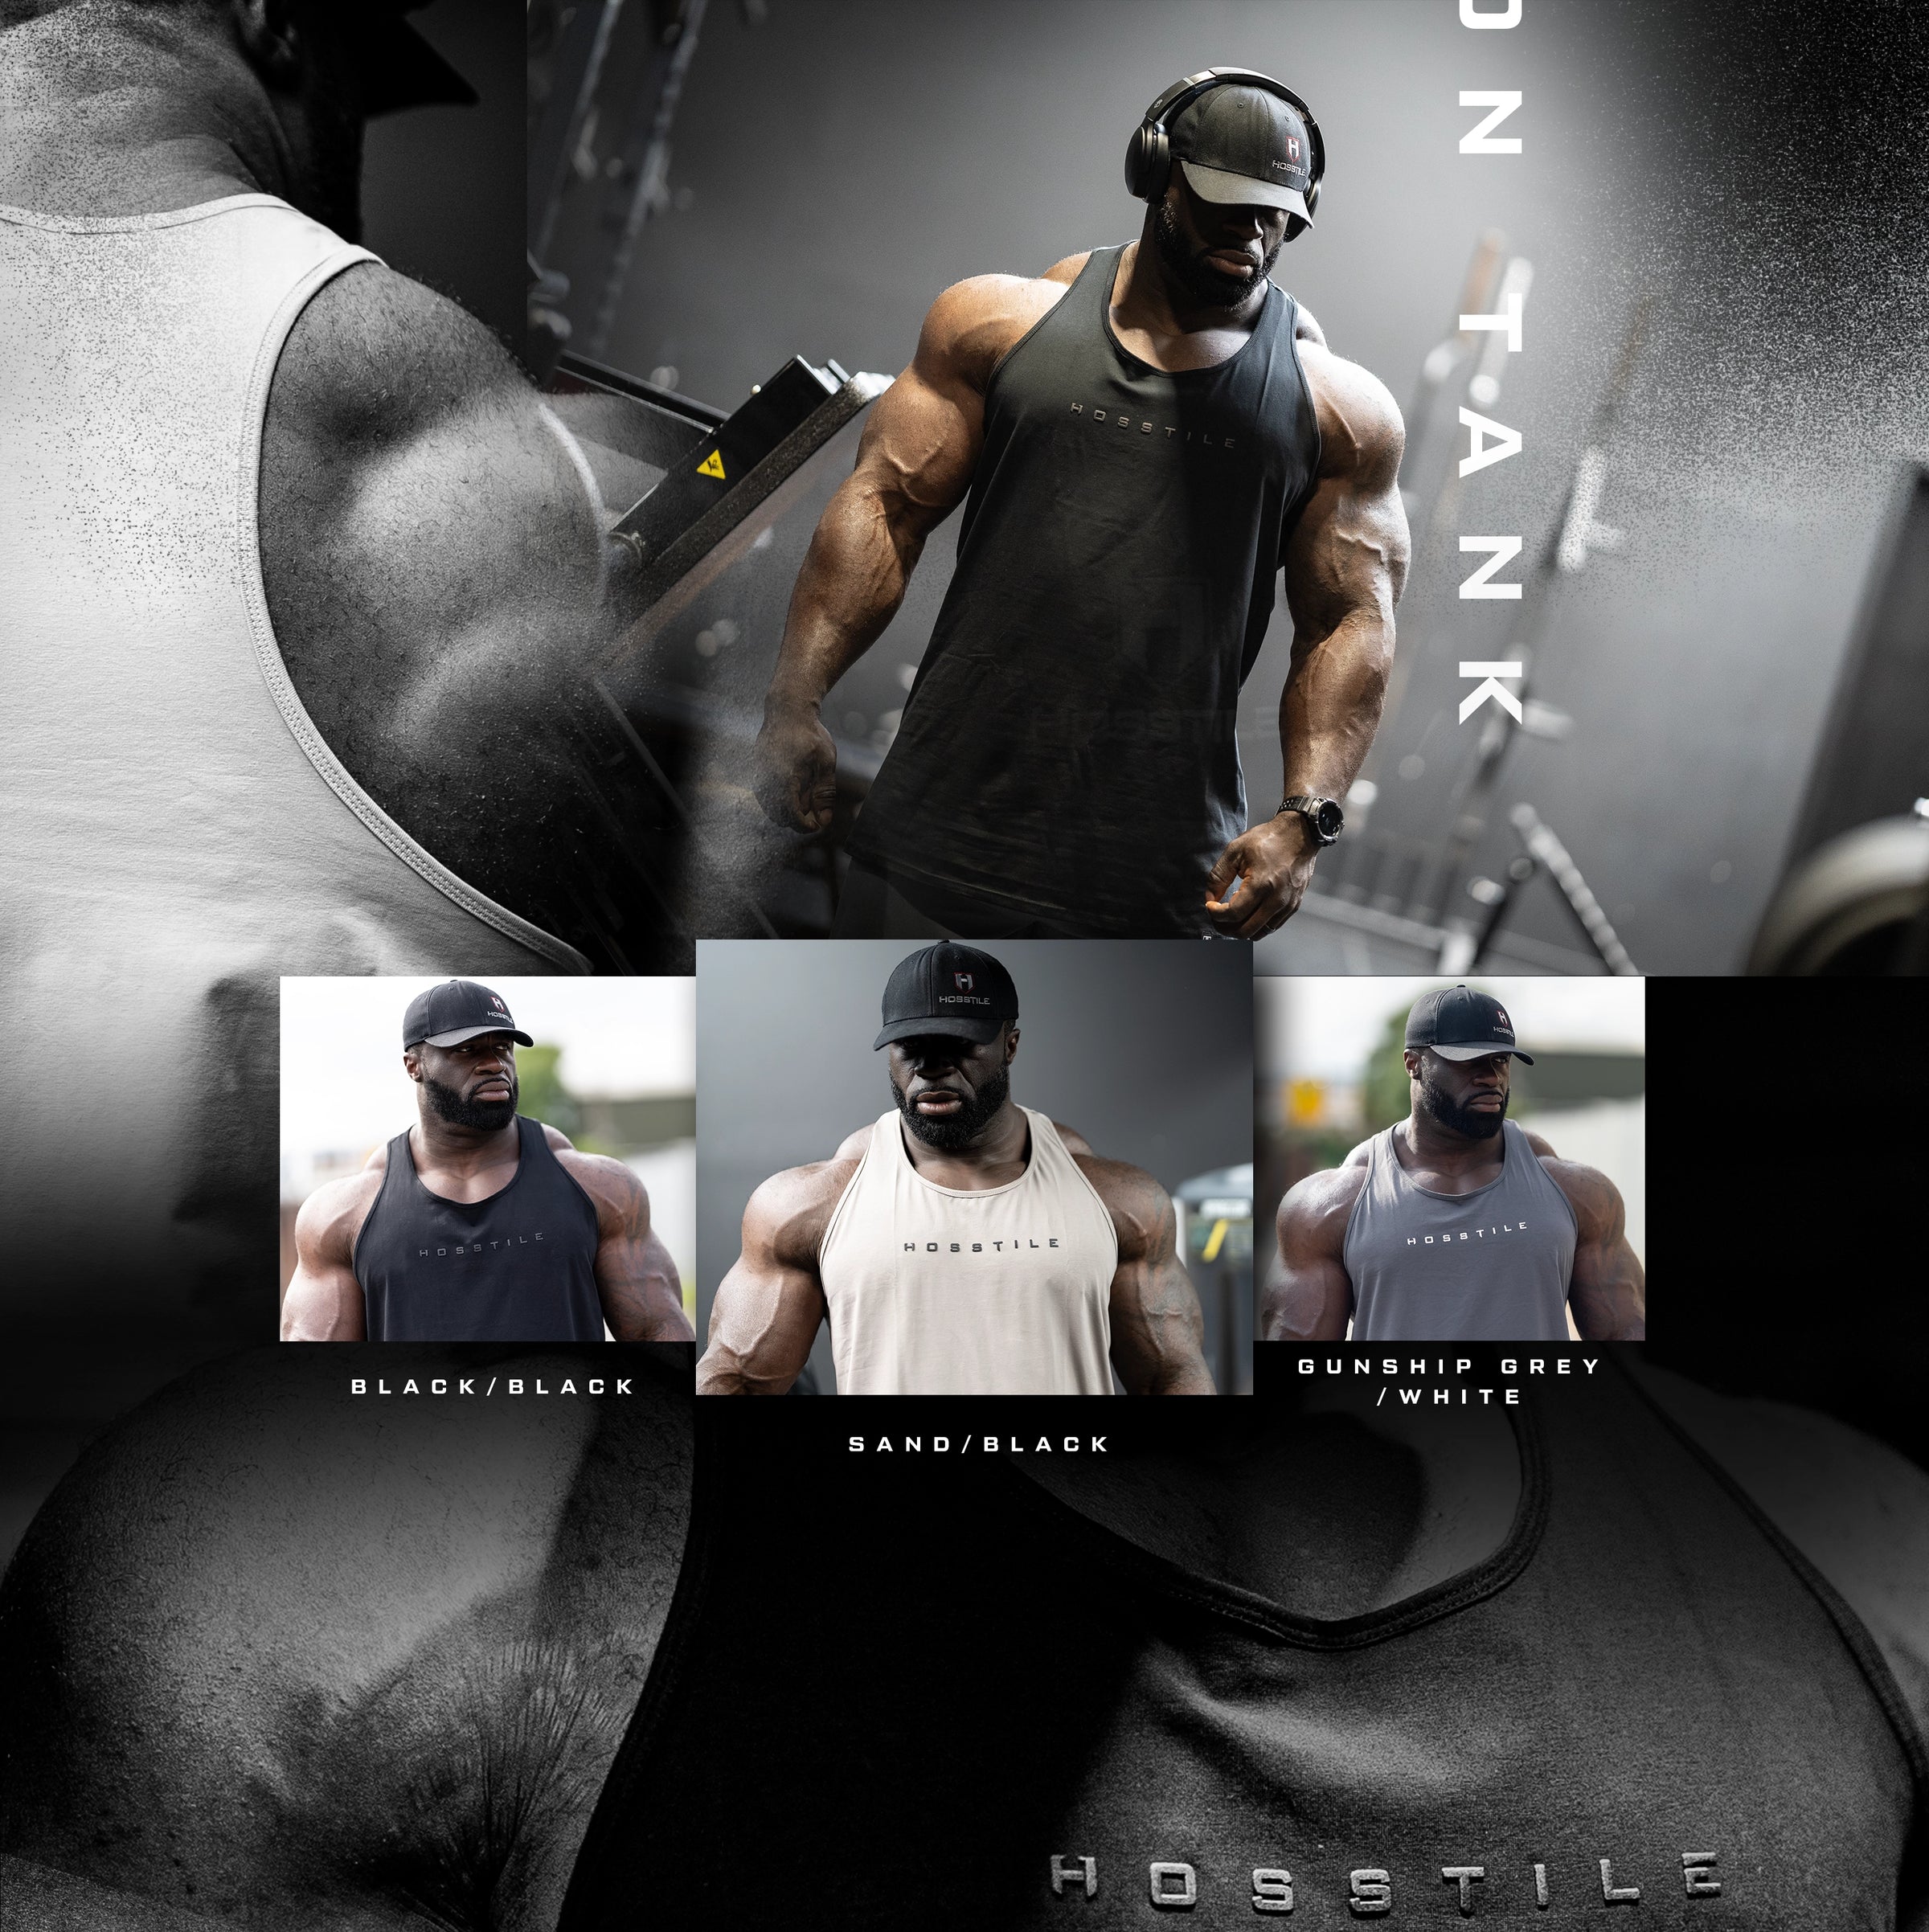 Bodybuilder Samson Dauda in Men's Workout Tank Tops Hosstile Uplift Collection 